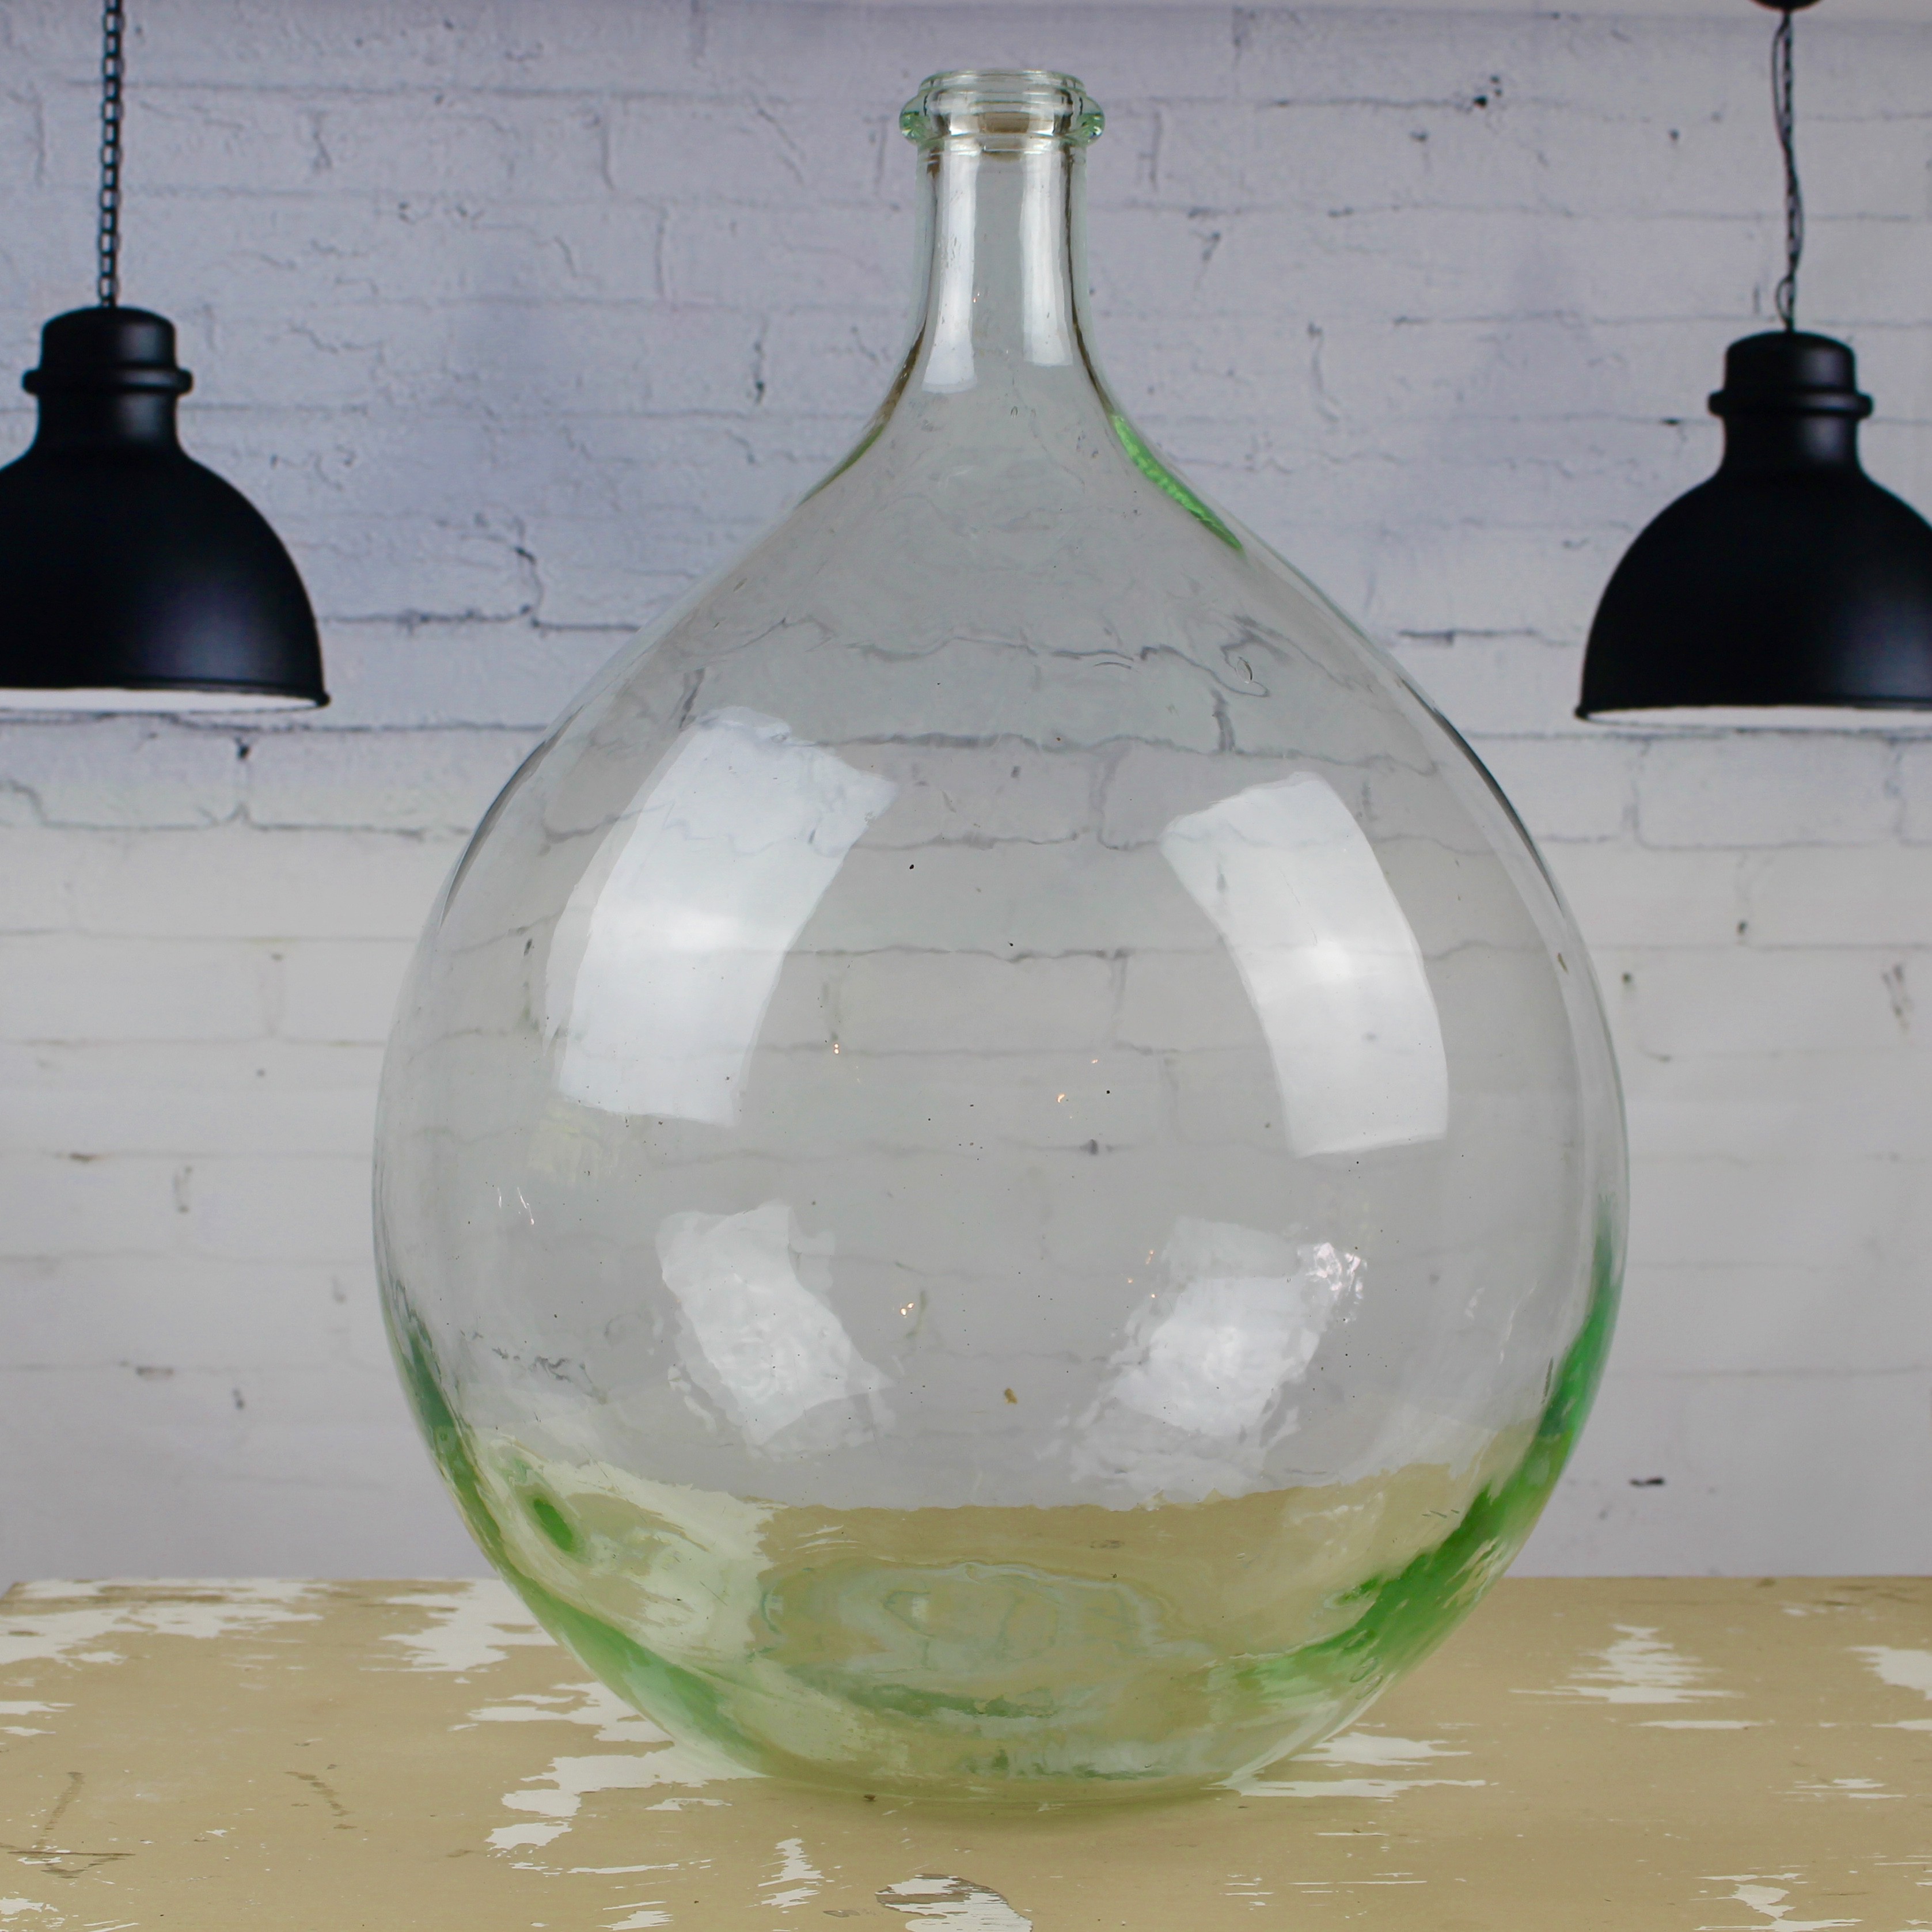 Vase bonbonne JEANNE en verre transparent et argent